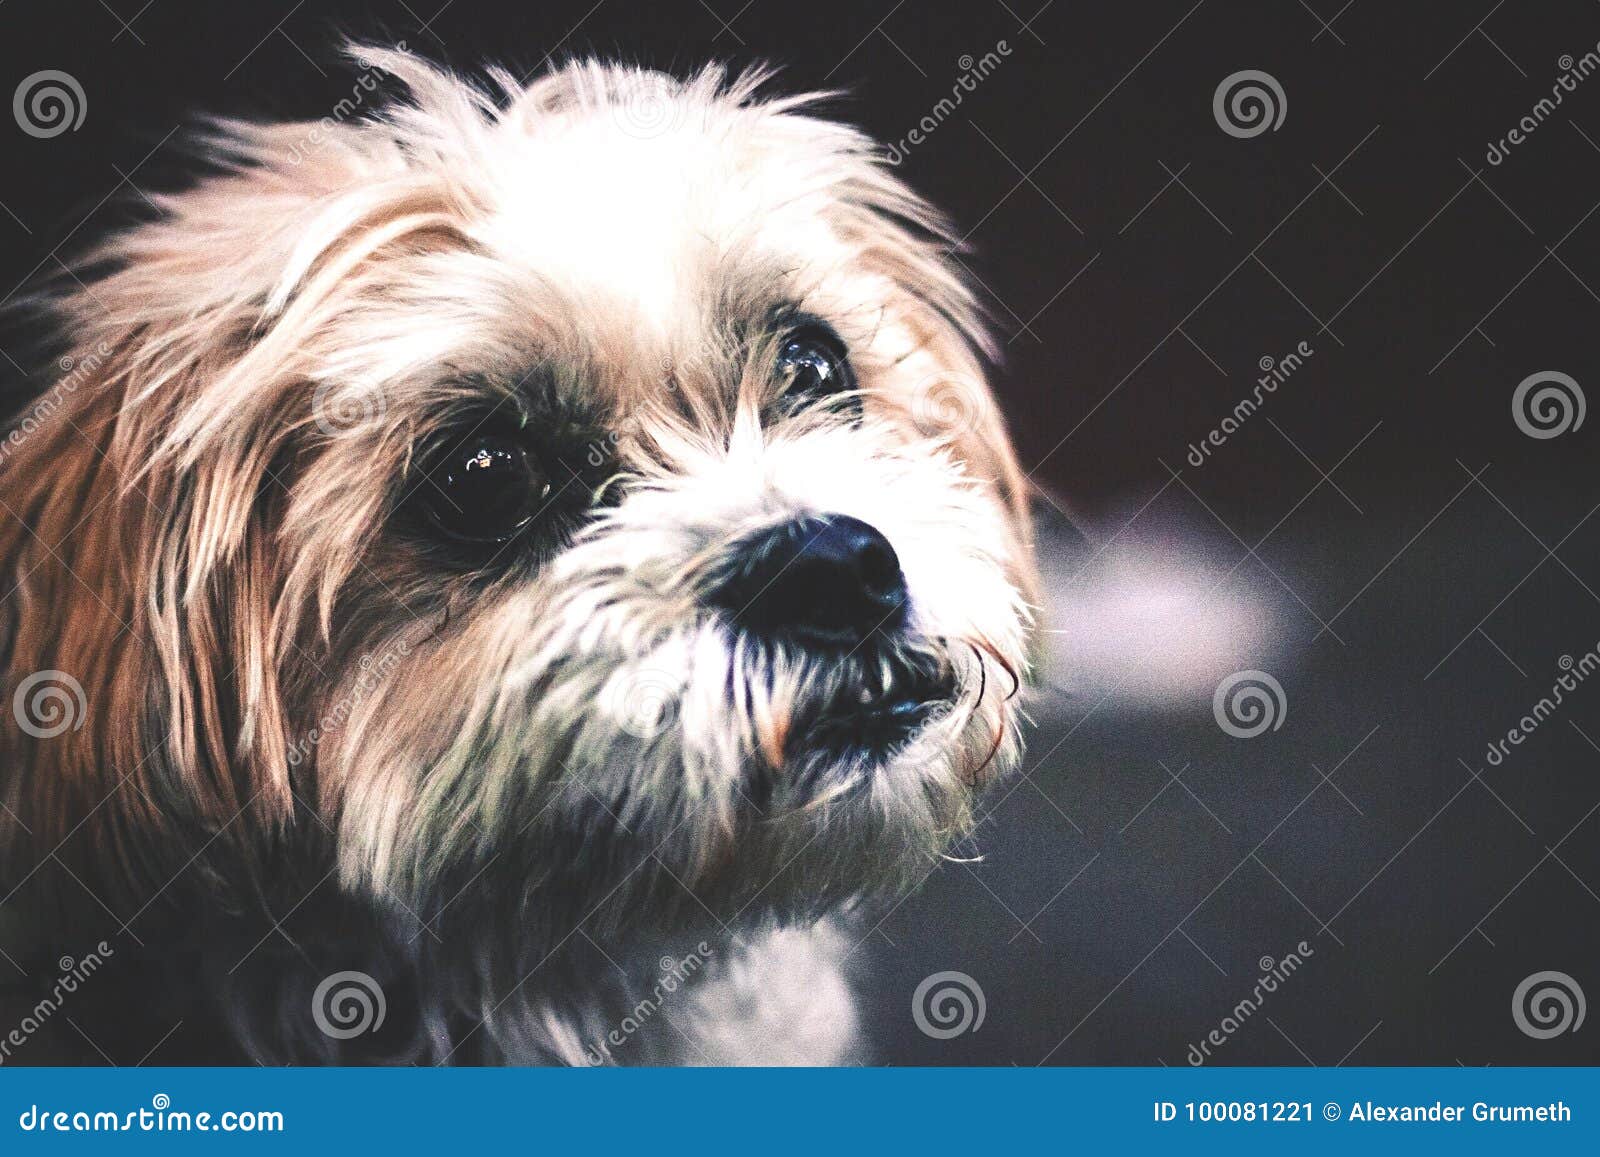 Cute Puppy Stock Image Image Of Eyes Cute Hair Animal